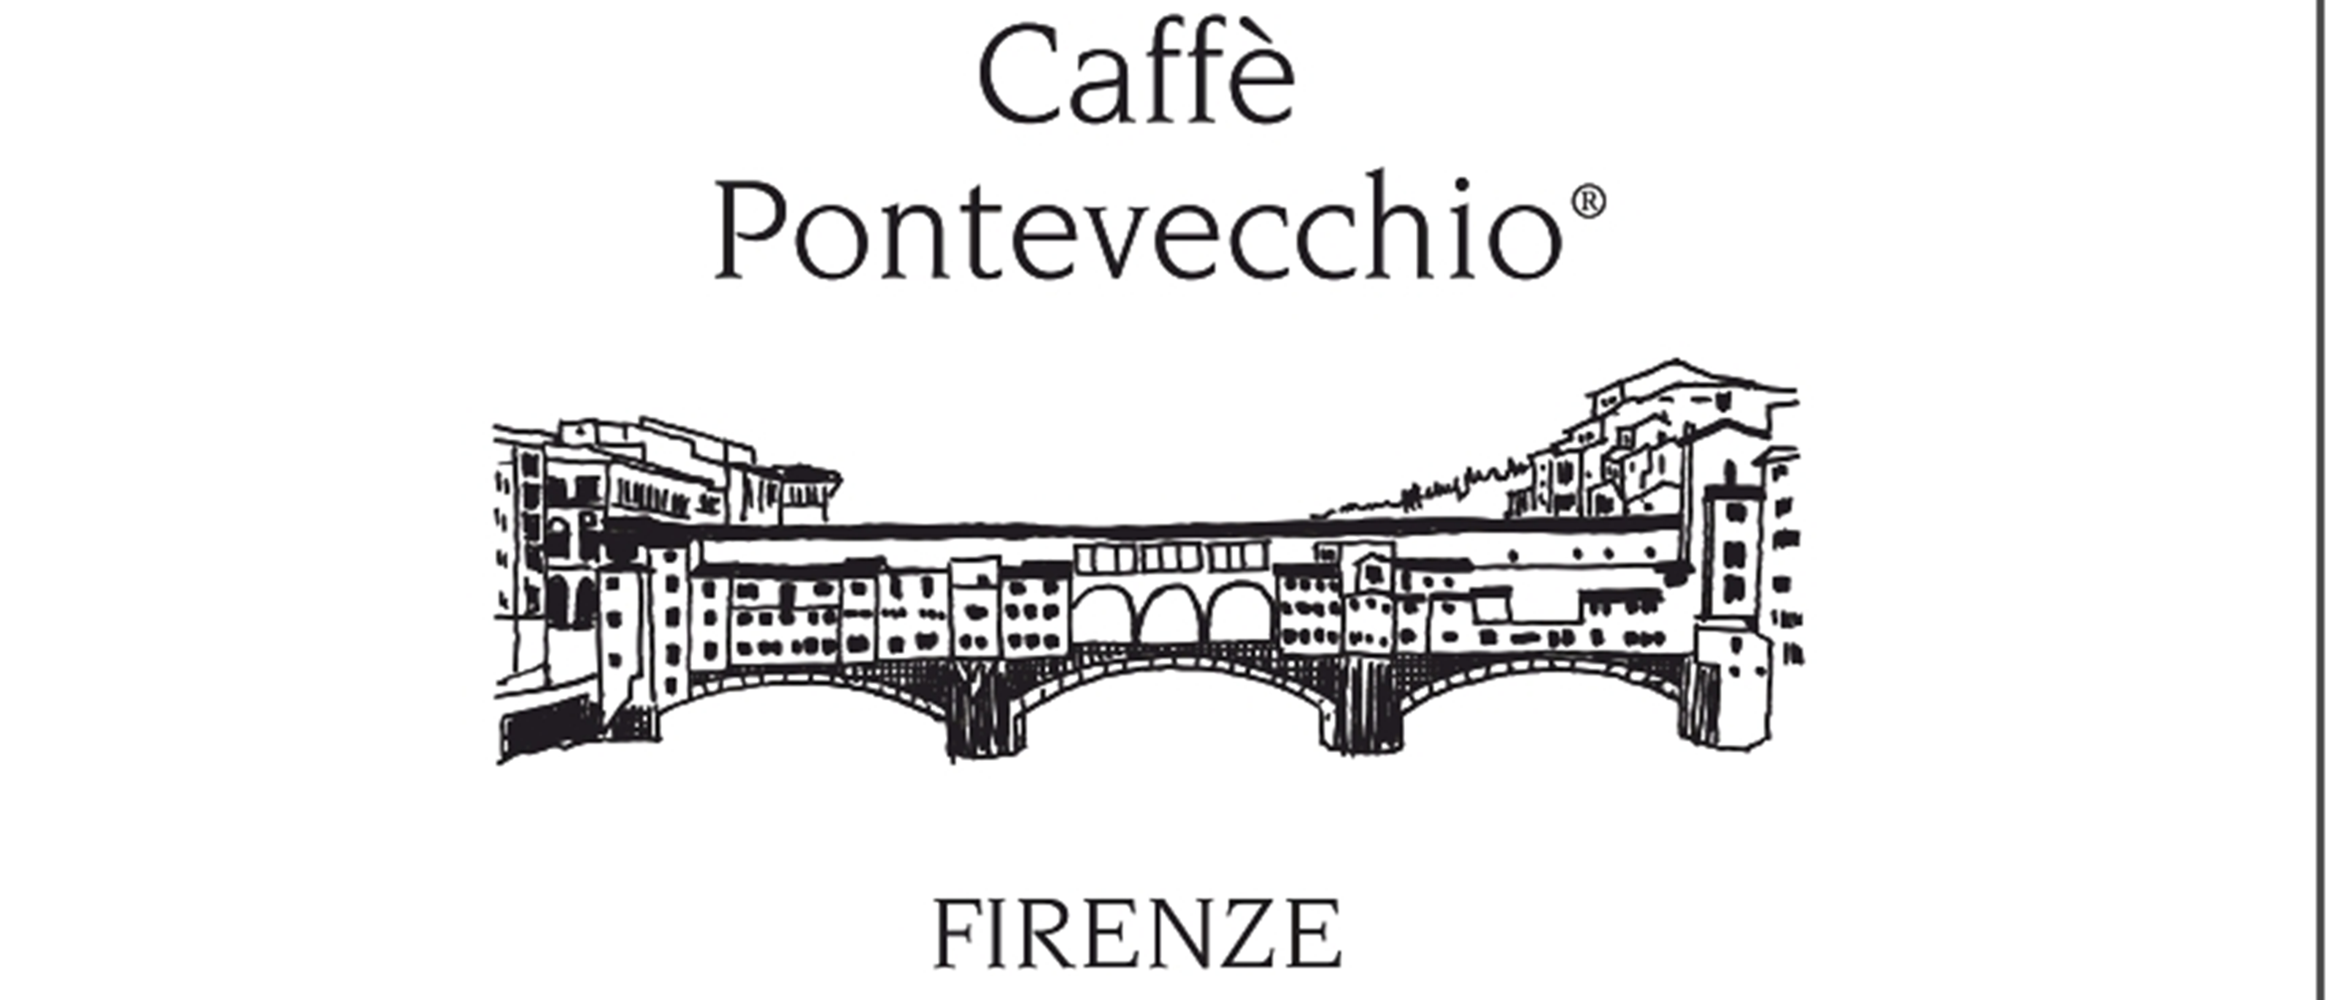 Caffè Pontevecchio Firenze